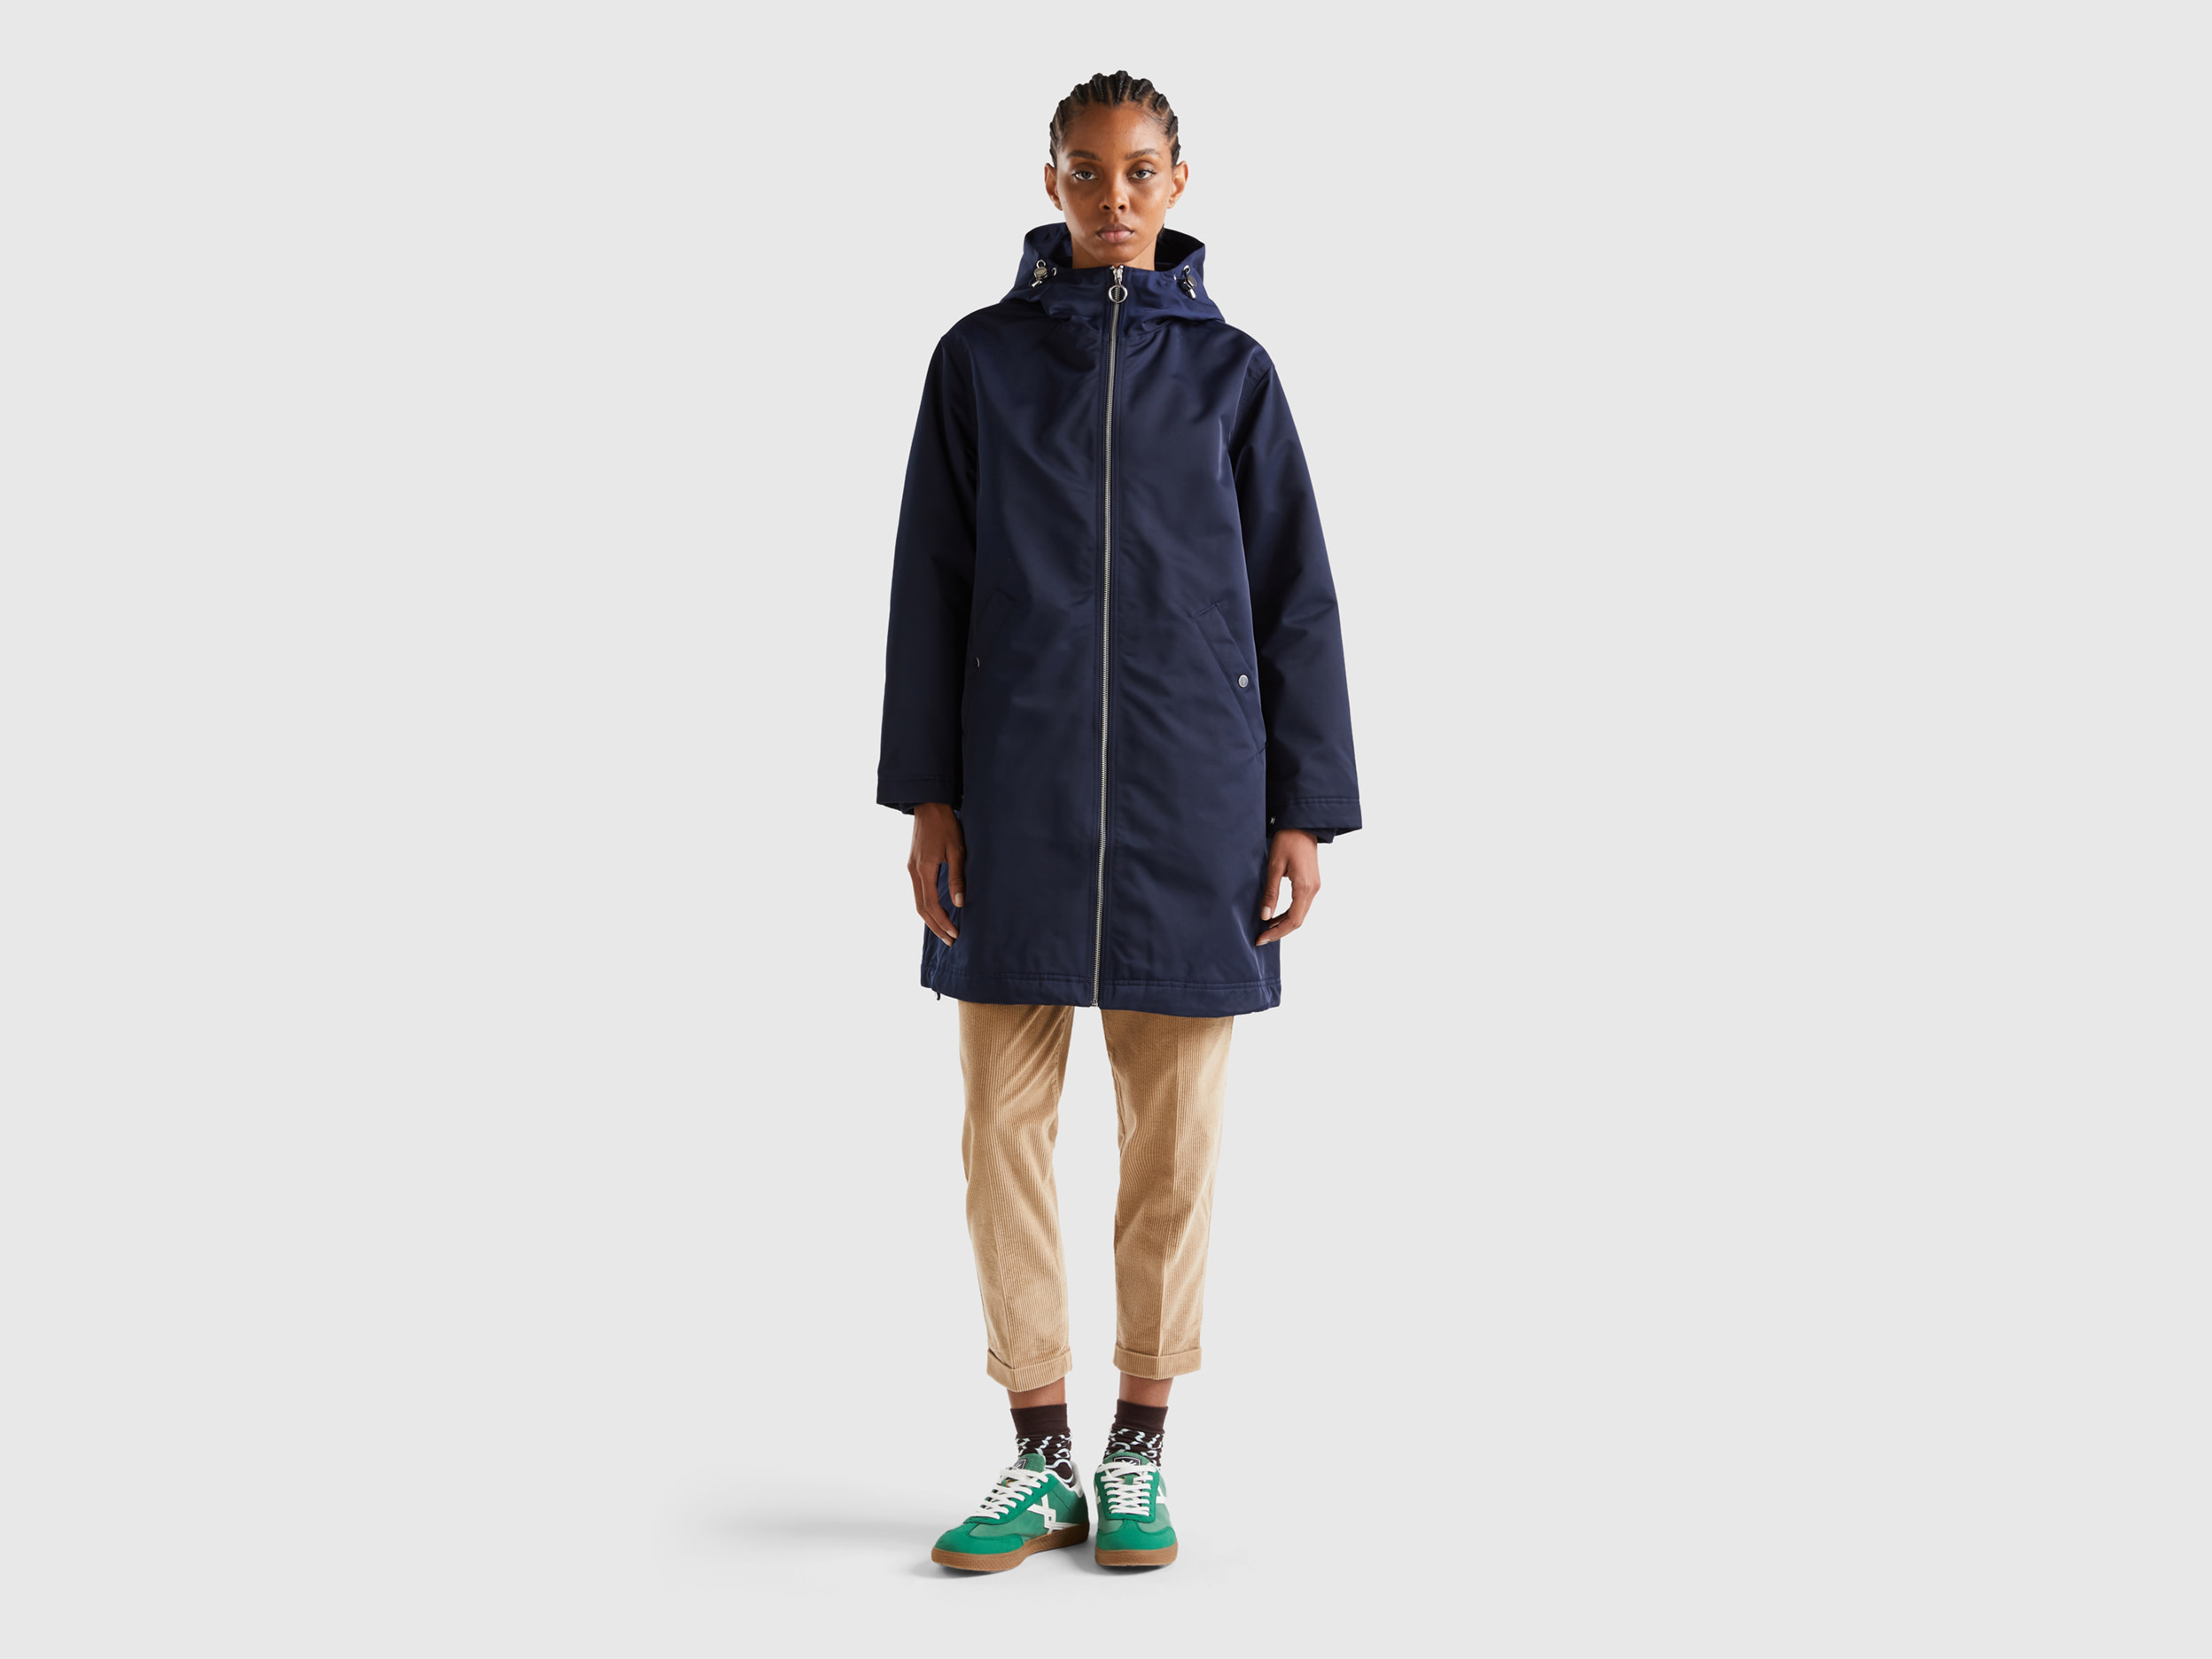 Benetton, Nylon Rainproof Jacket, size L, Dark Blue, Women